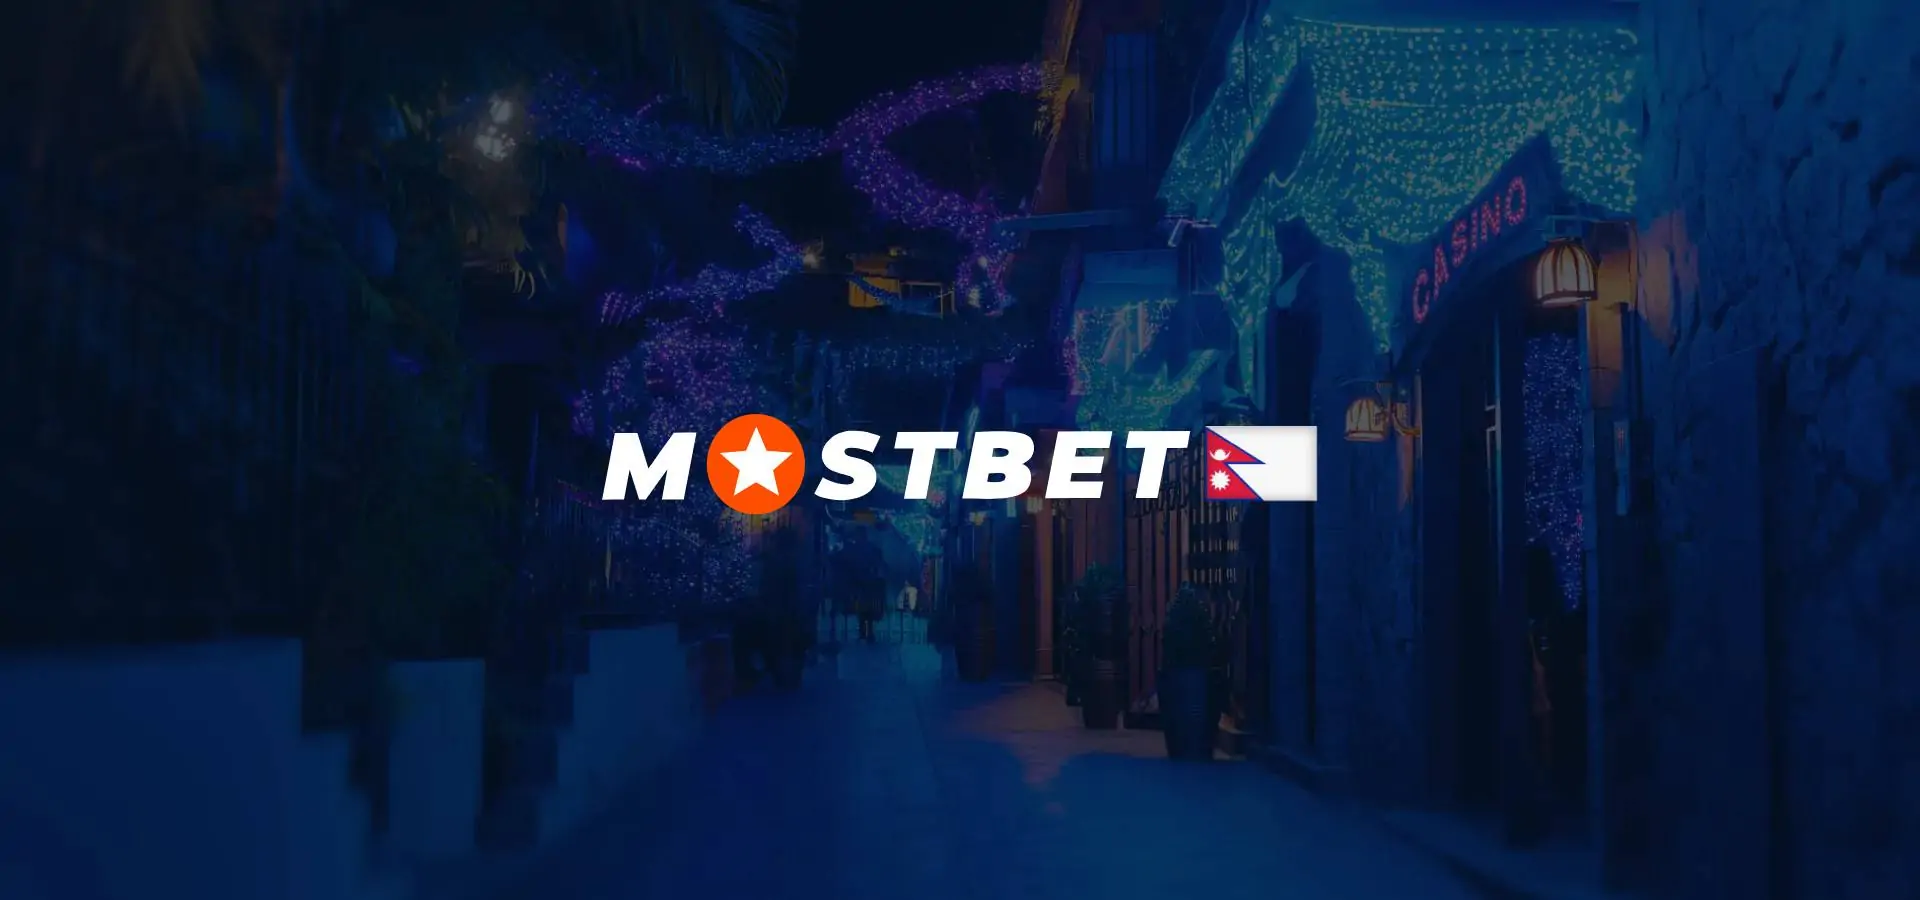 Mostbet Promo Code Nepal